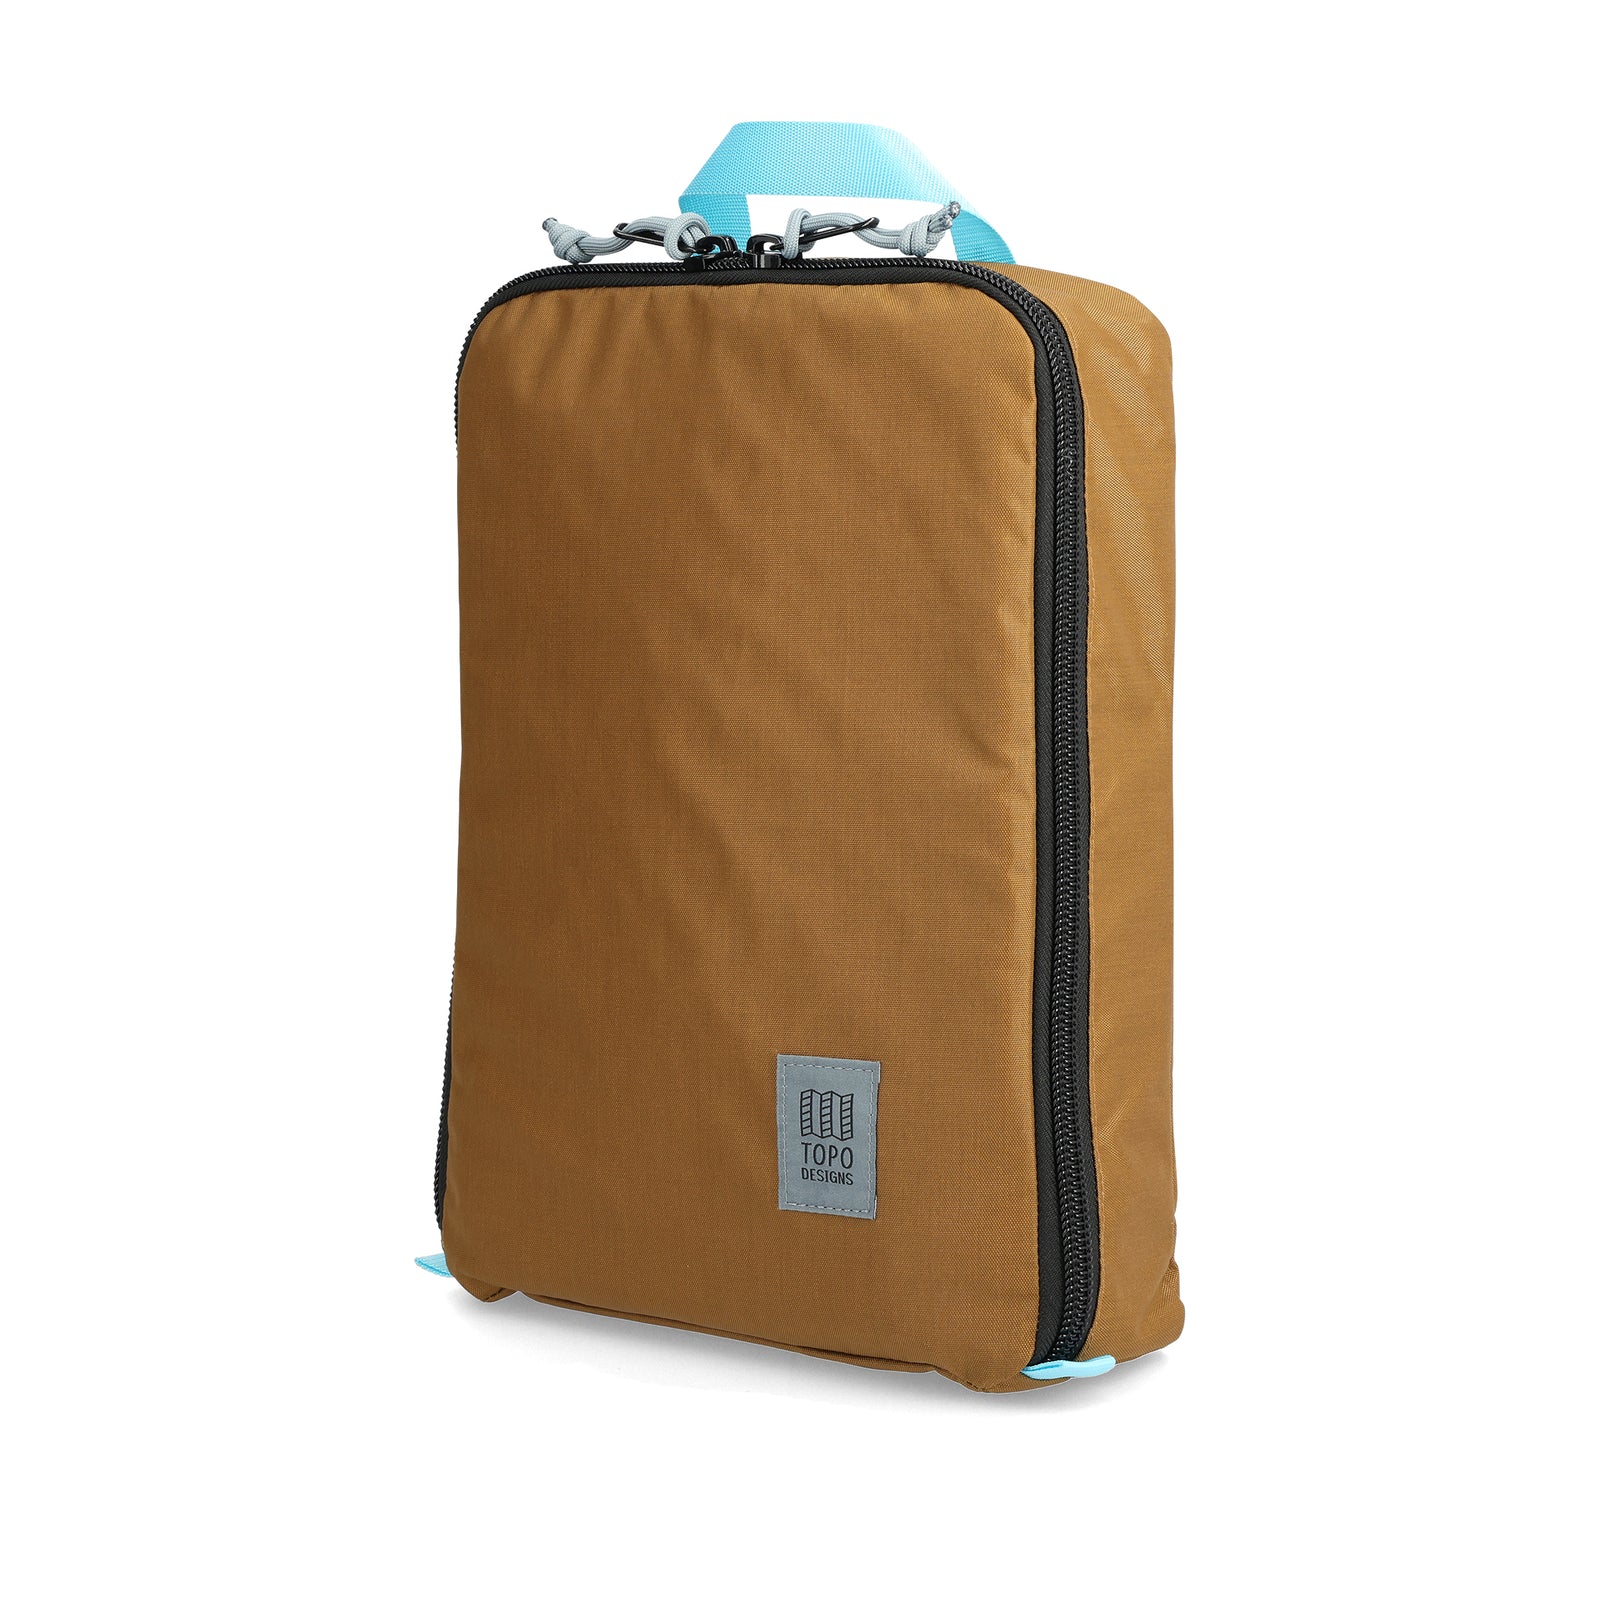 Front View of Topo Designs Pack Bag - 10L in "Dark Khaki"